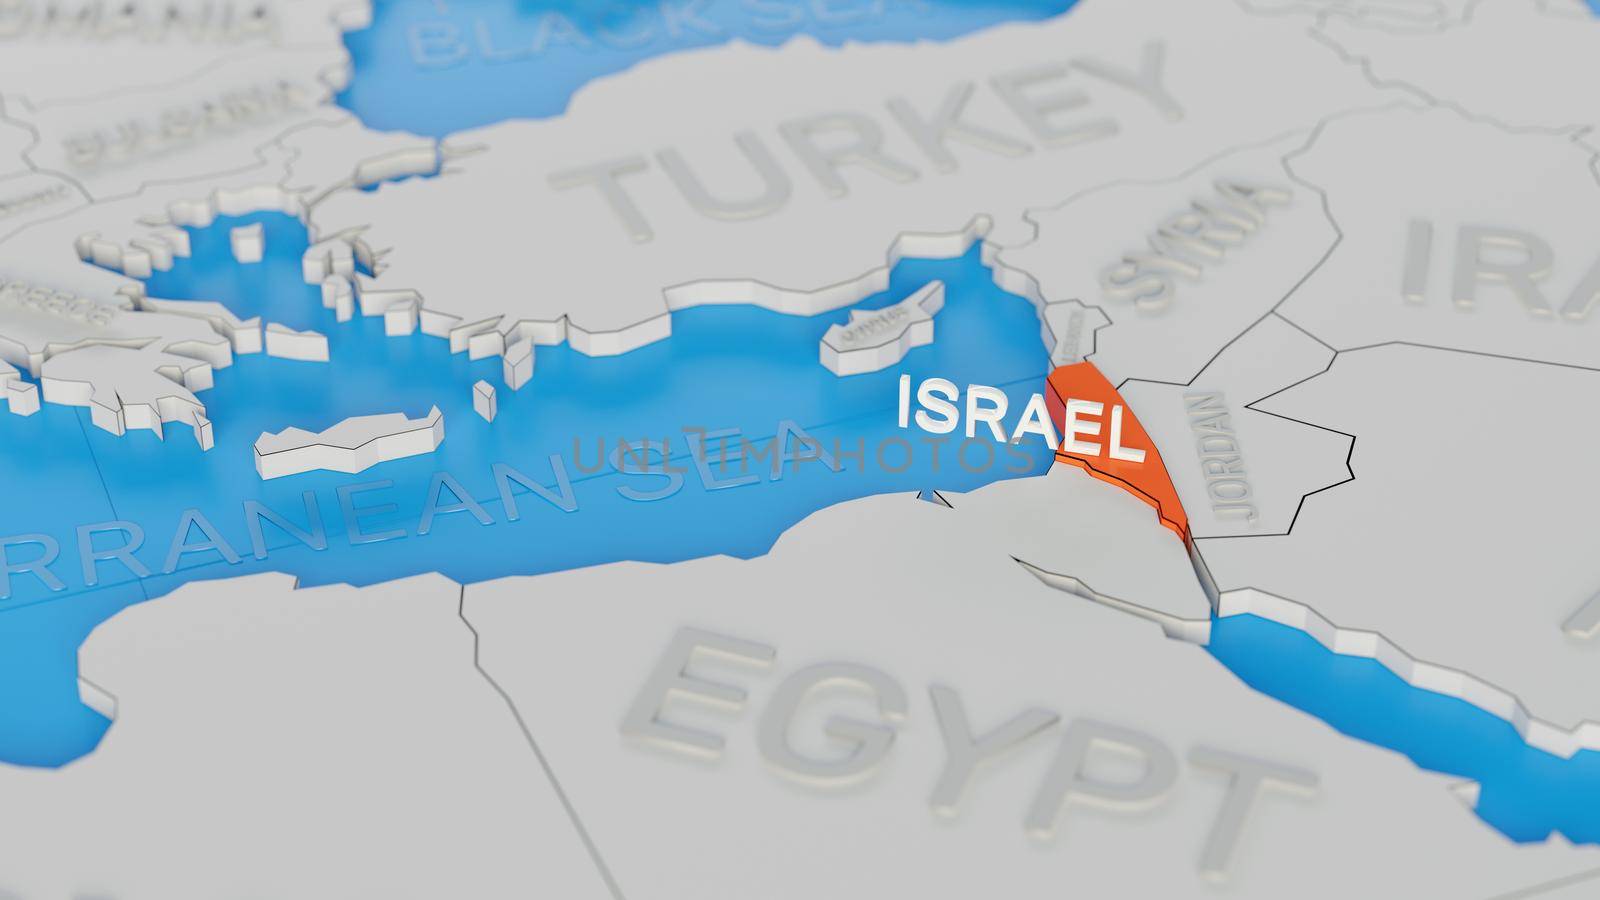 Israel highlighted on a white simplified 3D world map. Digital 3D render. by hernan_hyper